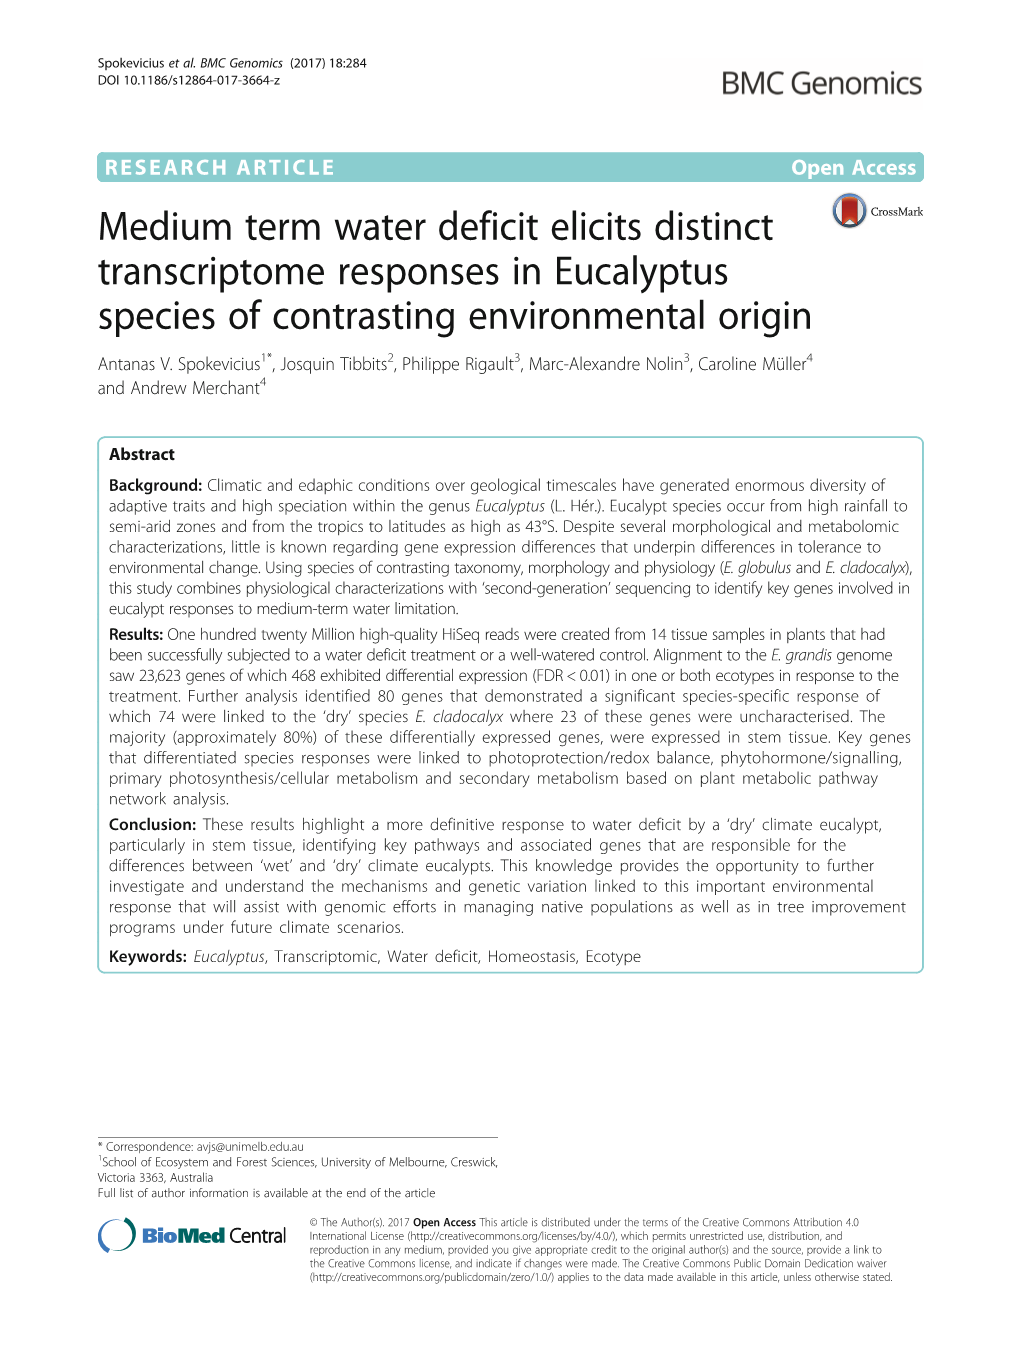 Medium Term Water Deficit Elicits Distinct Transcriptome Responses in Eucalyptus Species of Contrasting Environmental Origin Antanas V